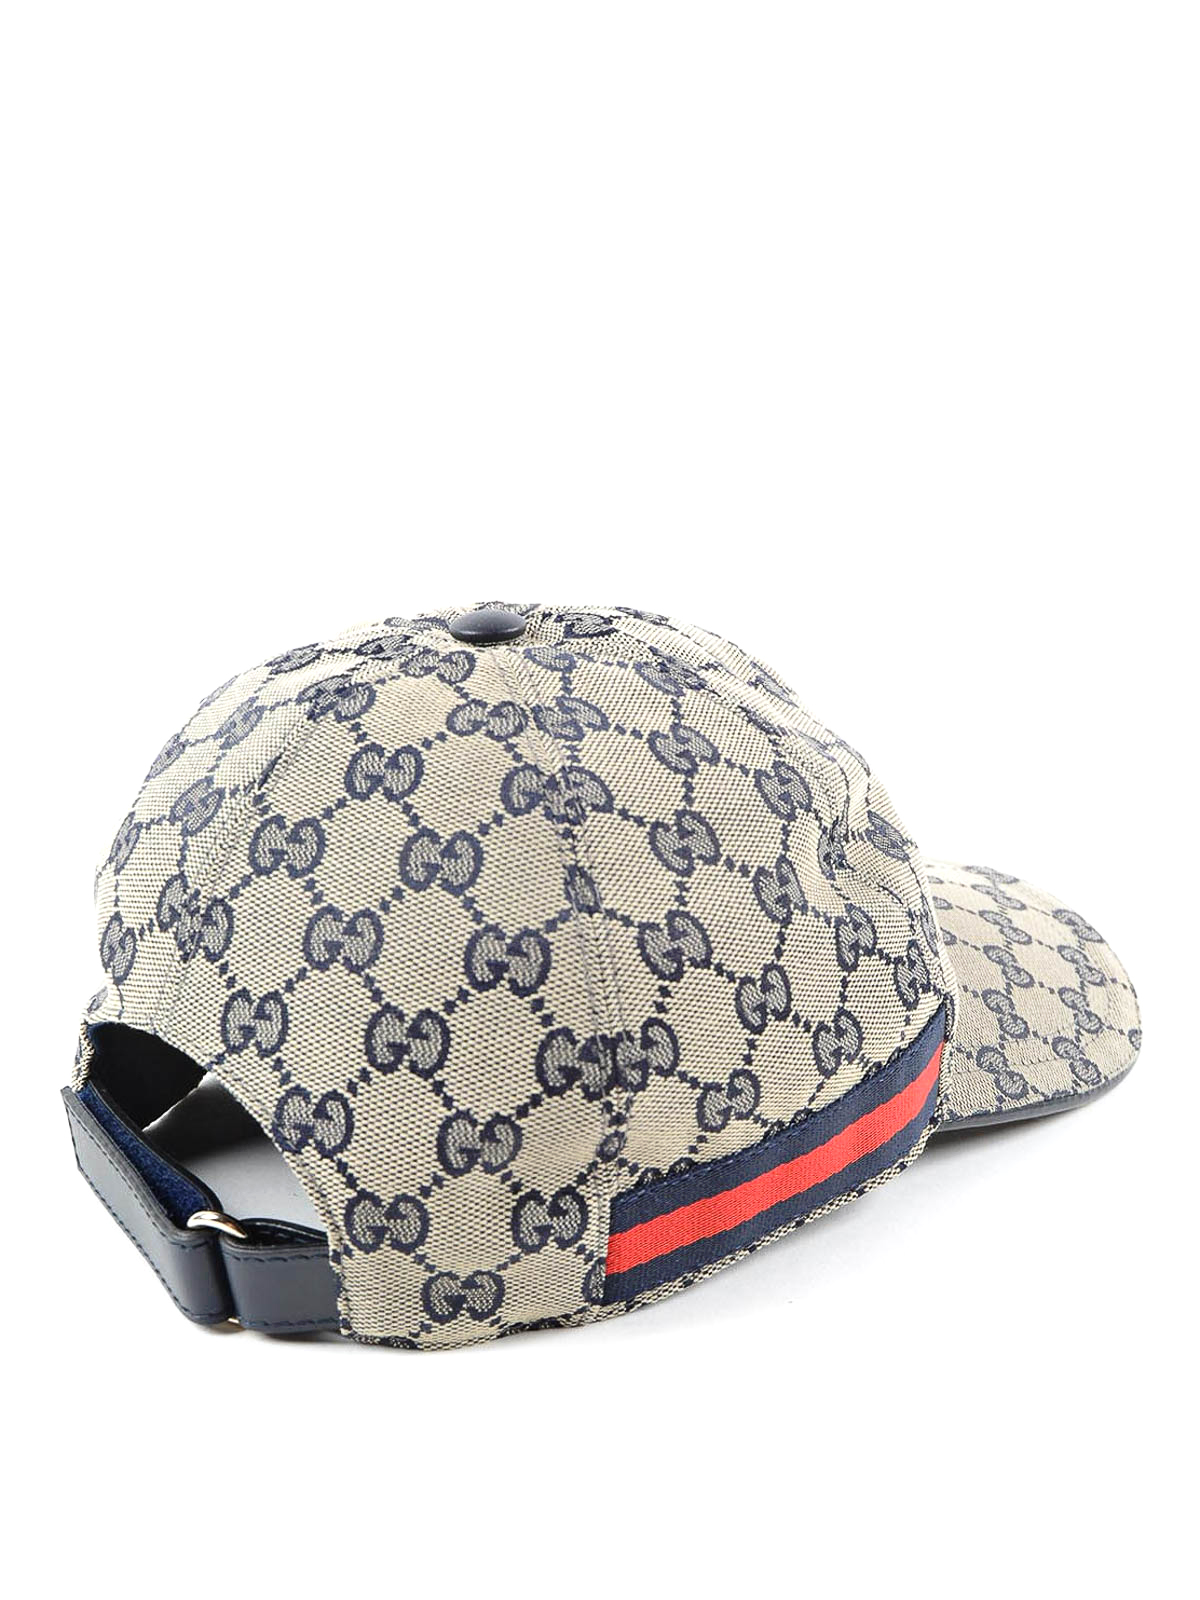 Hats & caps Gucci - GG SUPREME BASEBALL HAT - 200035KQW6G4080 